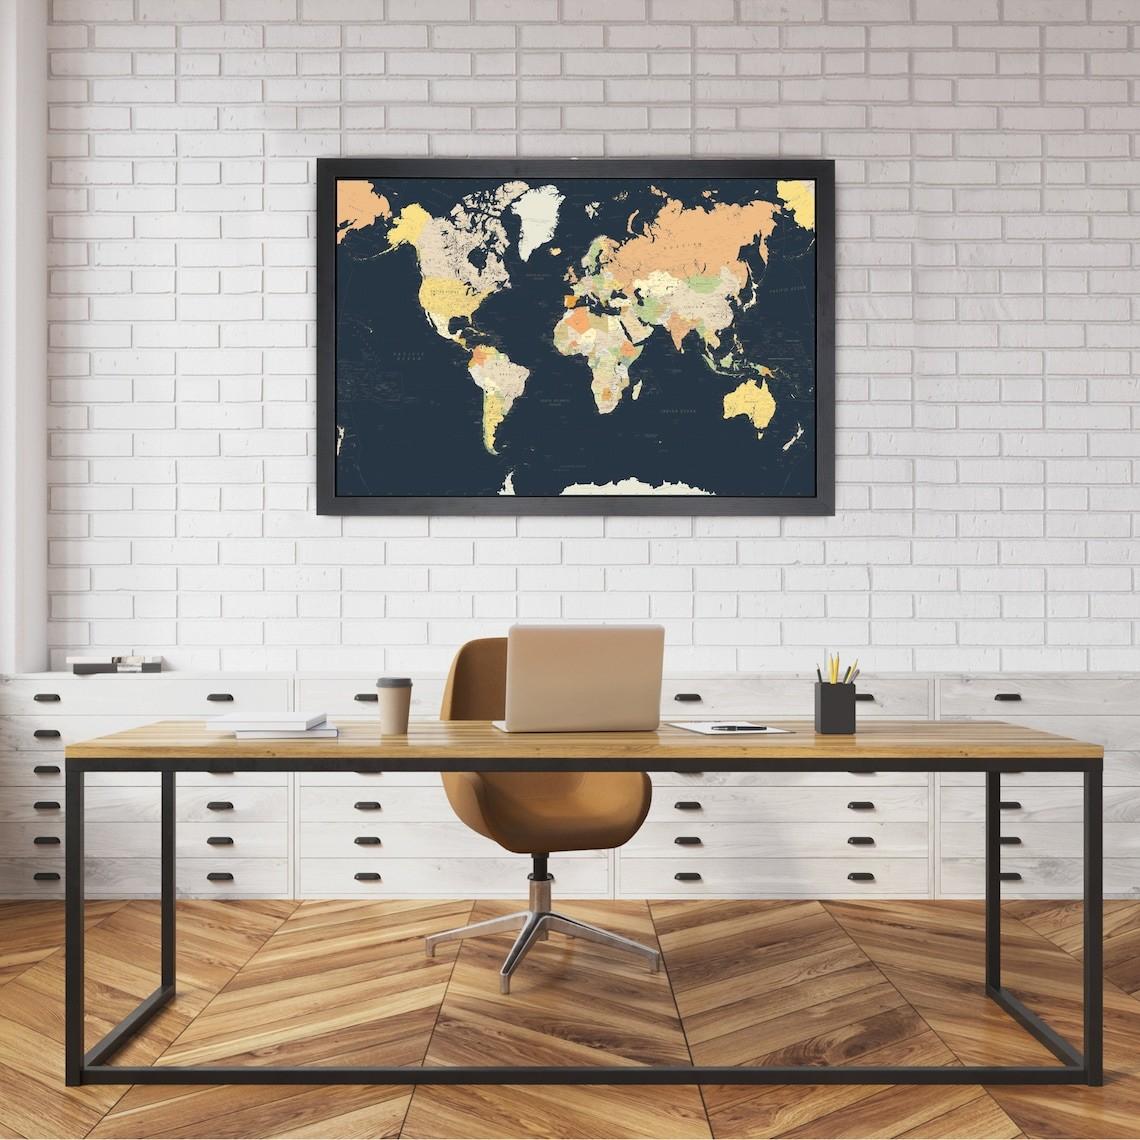 Pushpin World Map Home Office Wall Decor